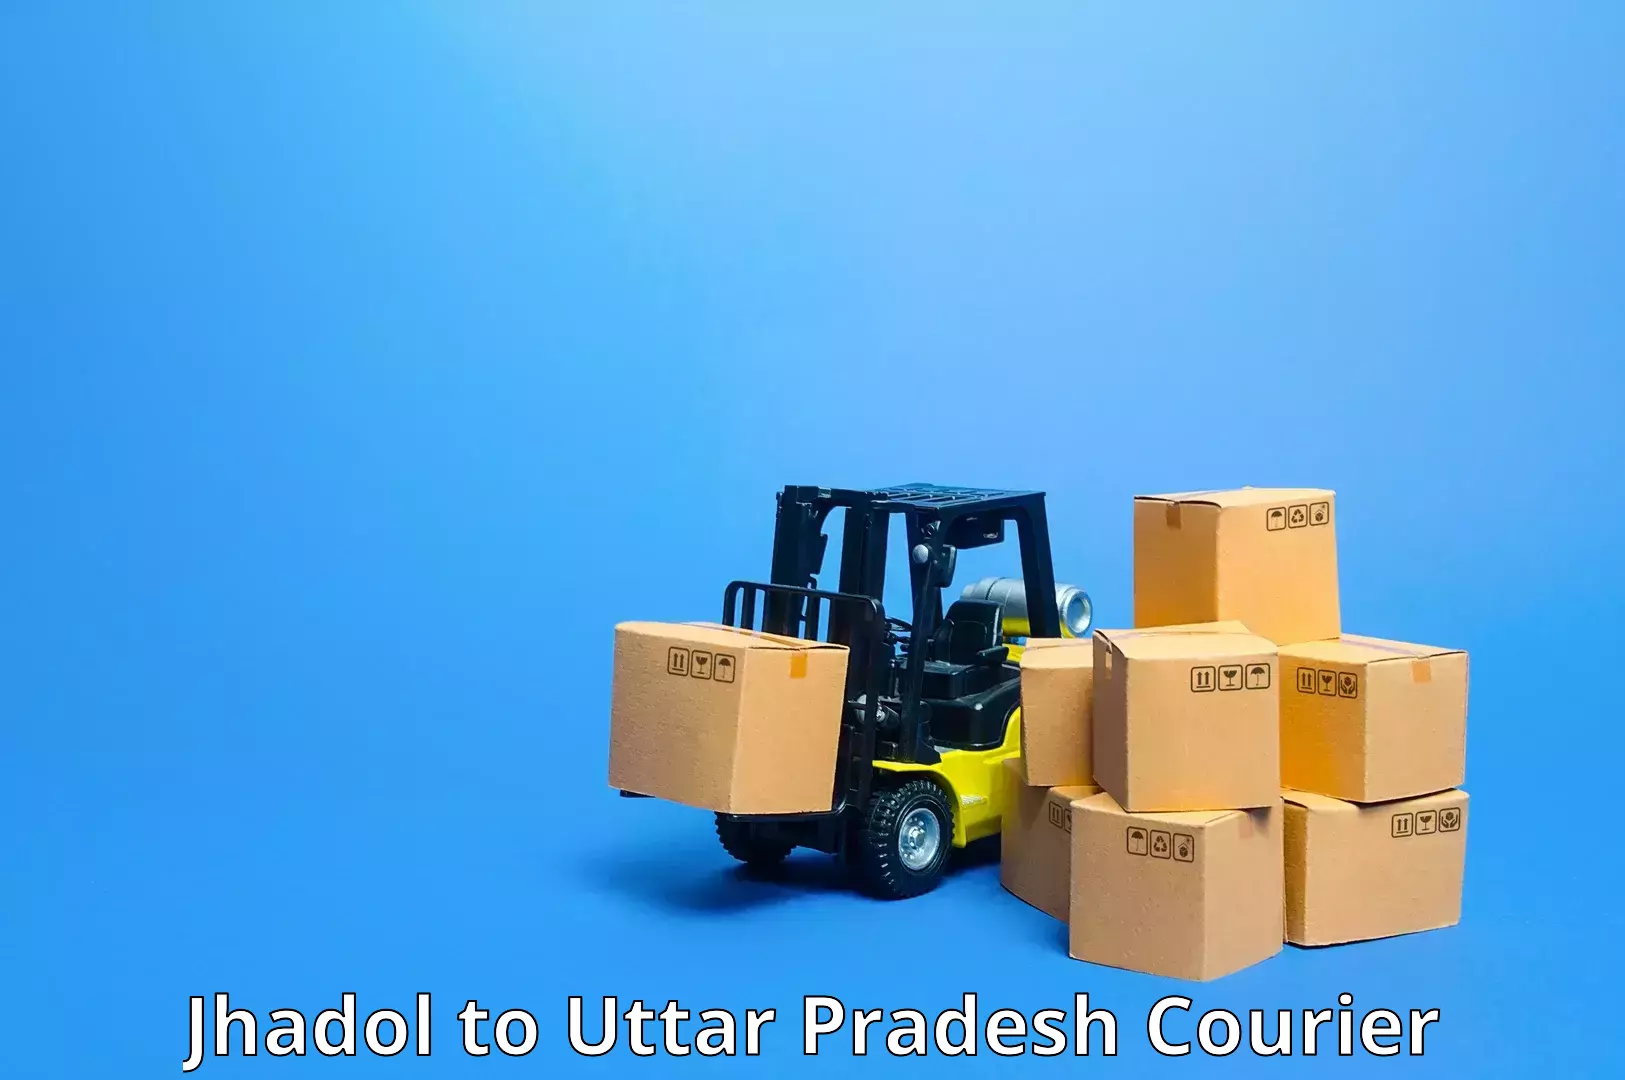 Express delivery capabilities Jhadol to Mohanlalganj